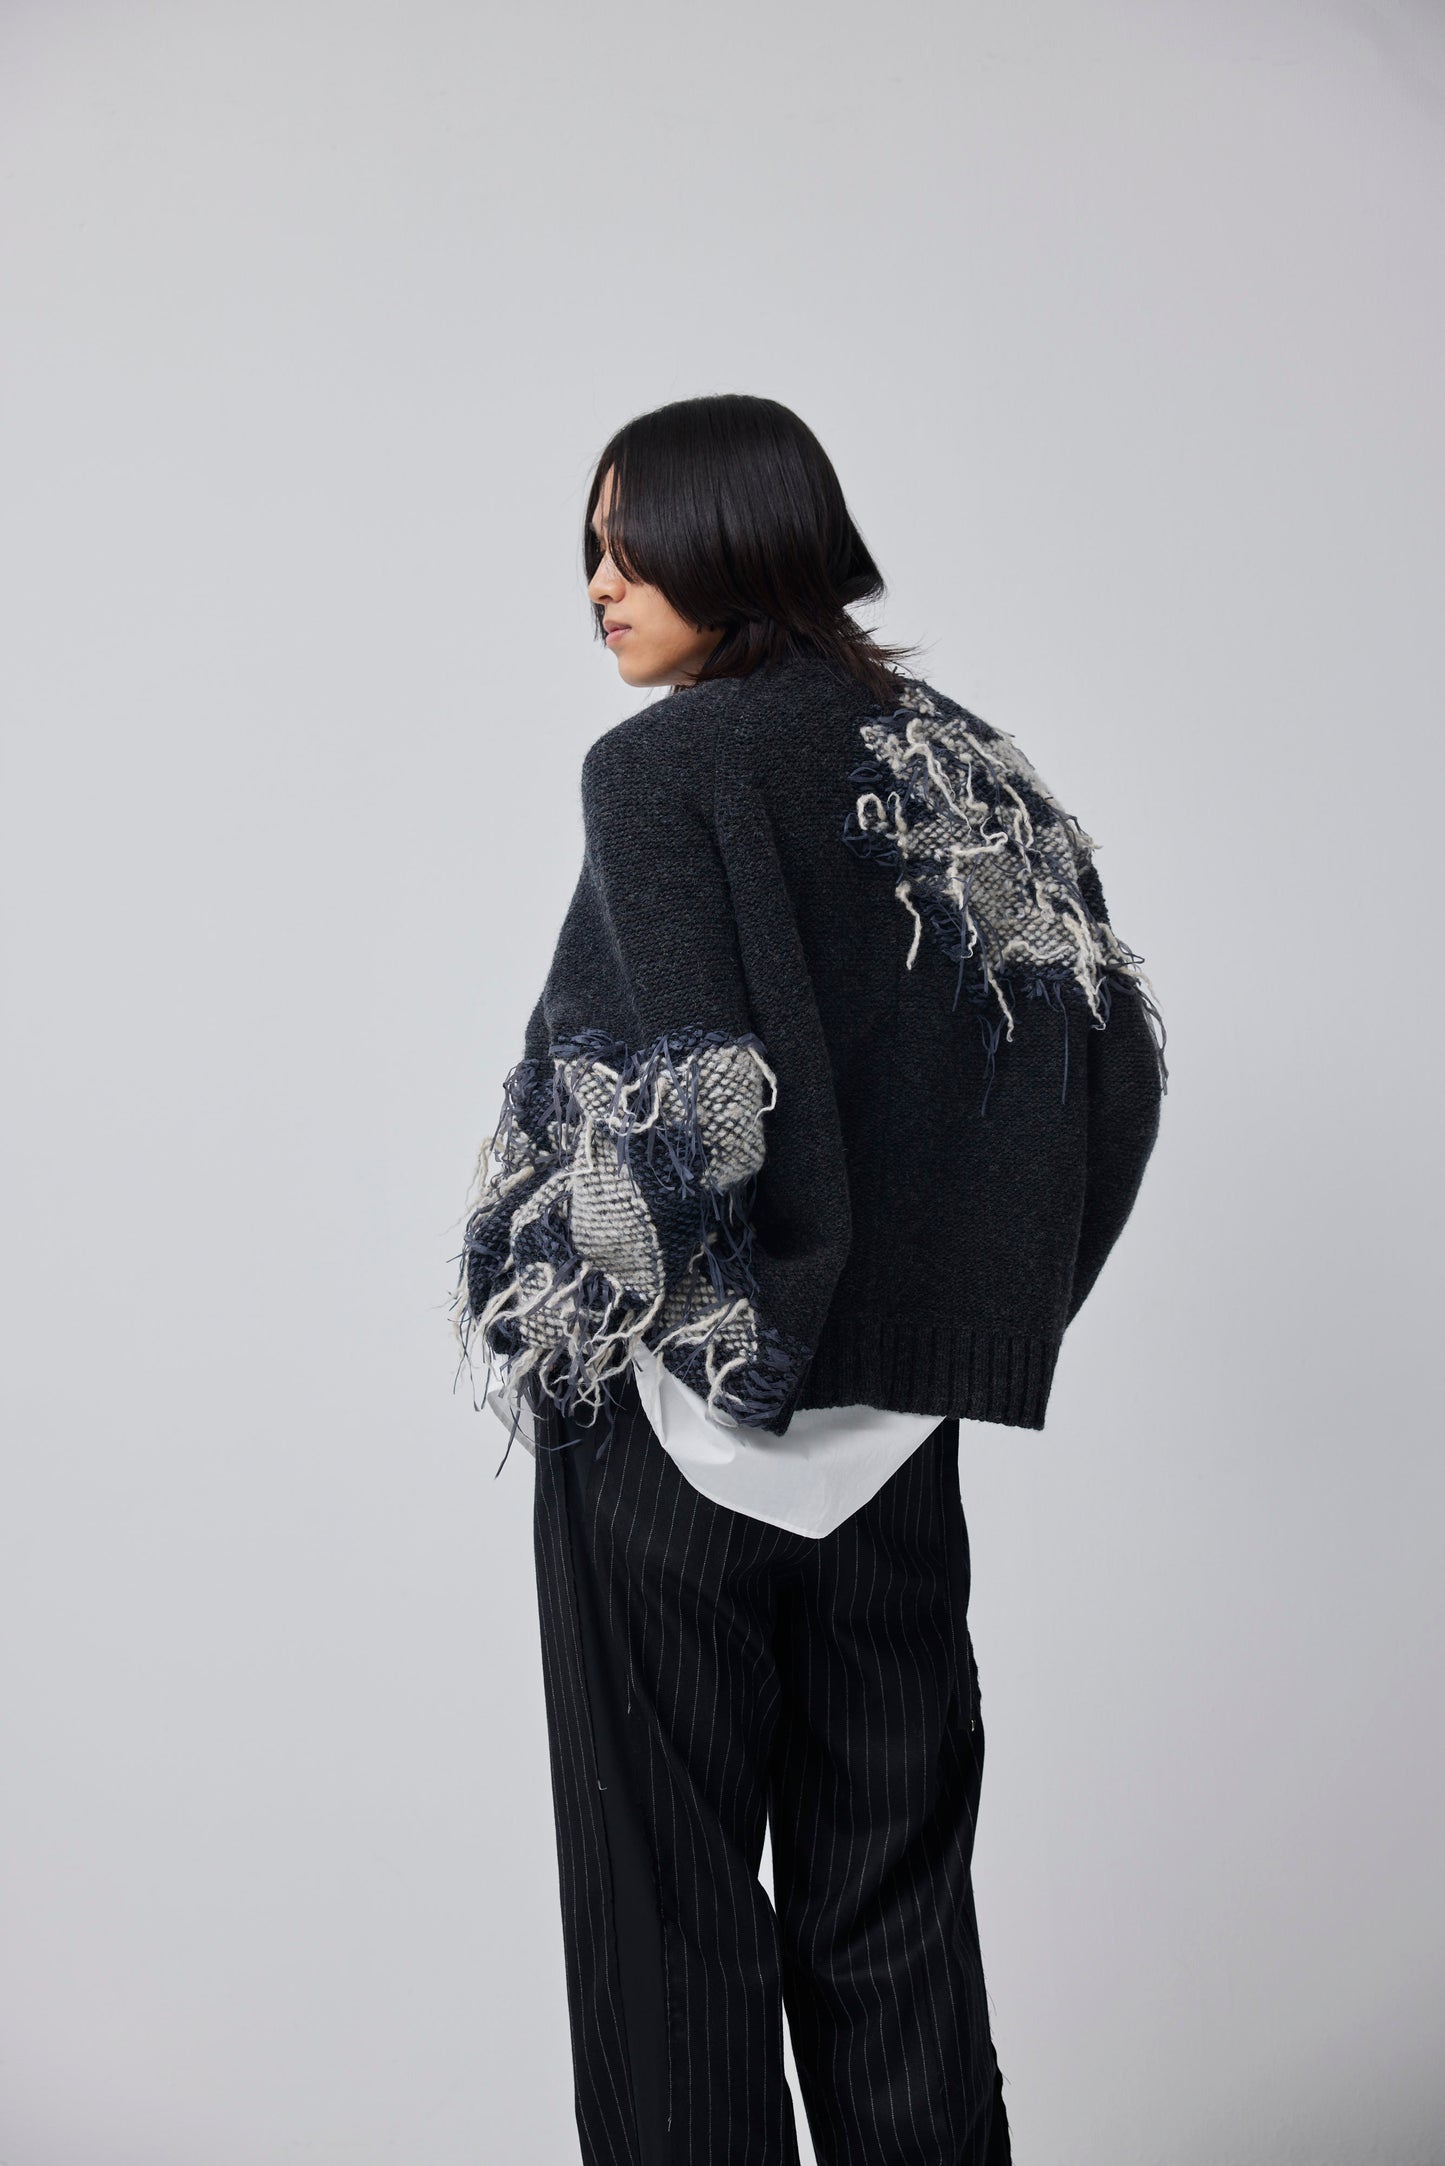 LB23AW-KN01-TRA-DA | Thread knitting intarsia sweater | IRON 